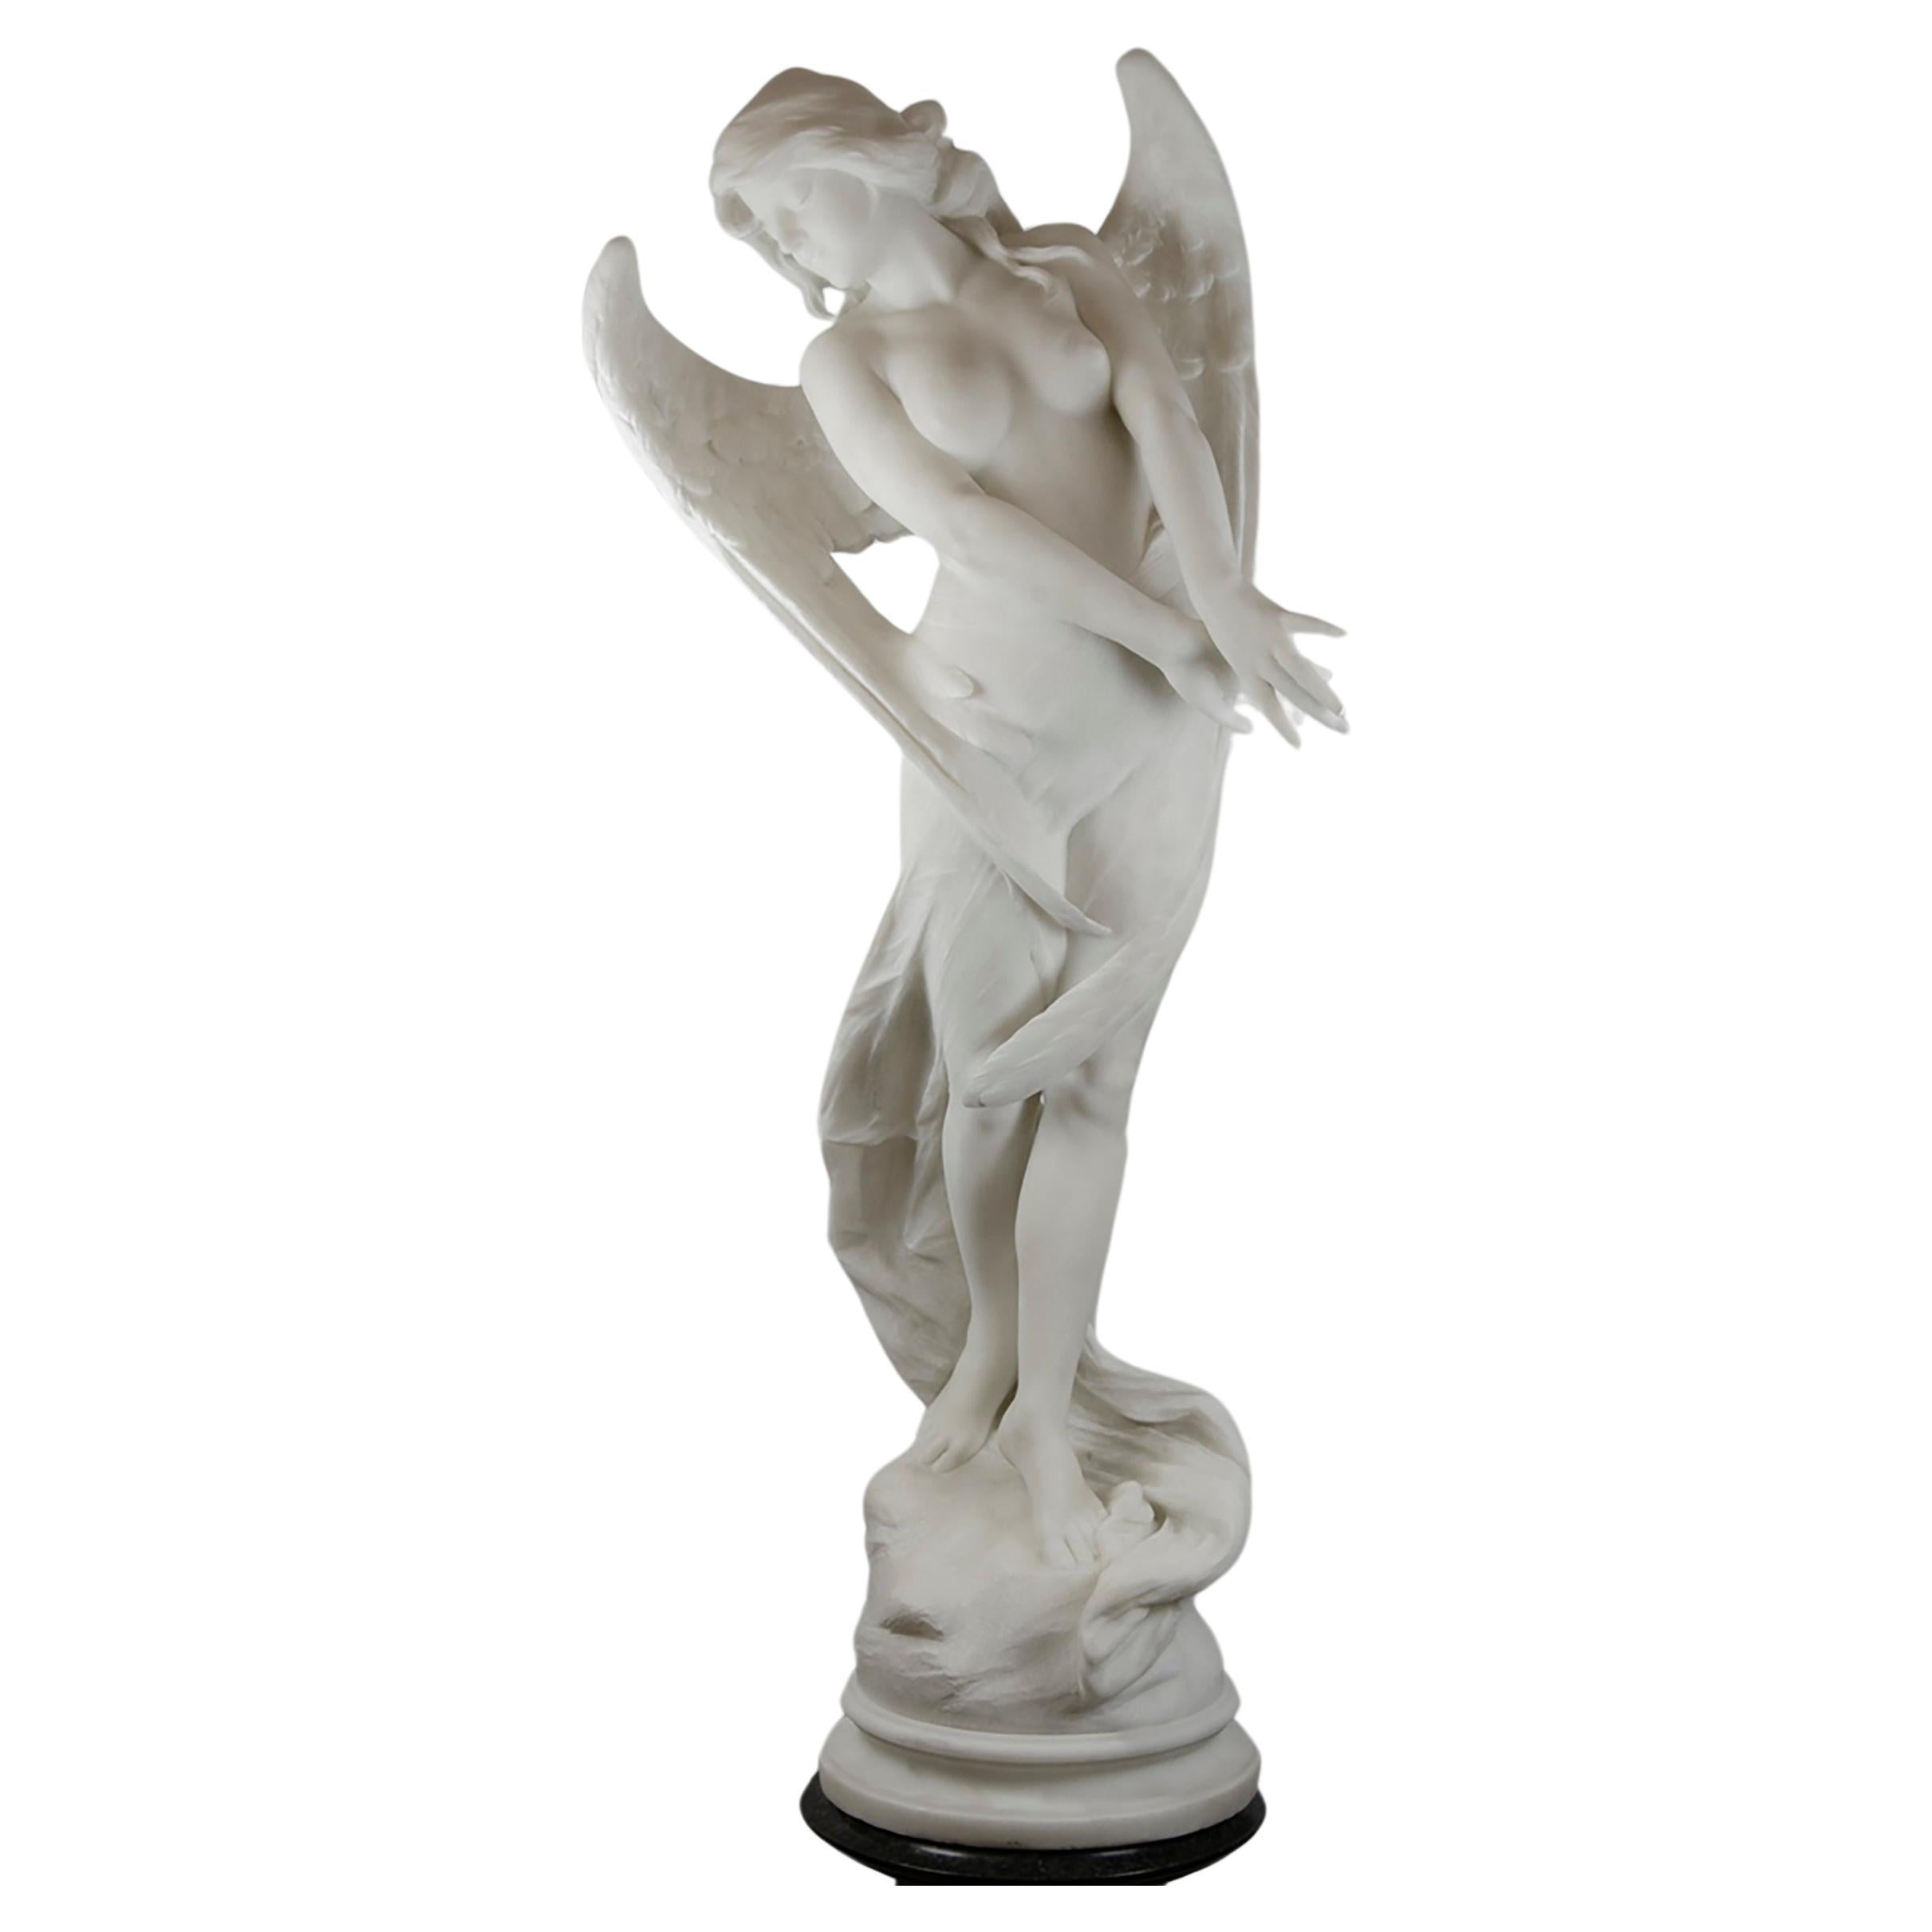 Italian, 1858–1941 Carrara Marble Sculpture "Un Angelo" by Emilio Fiaschi